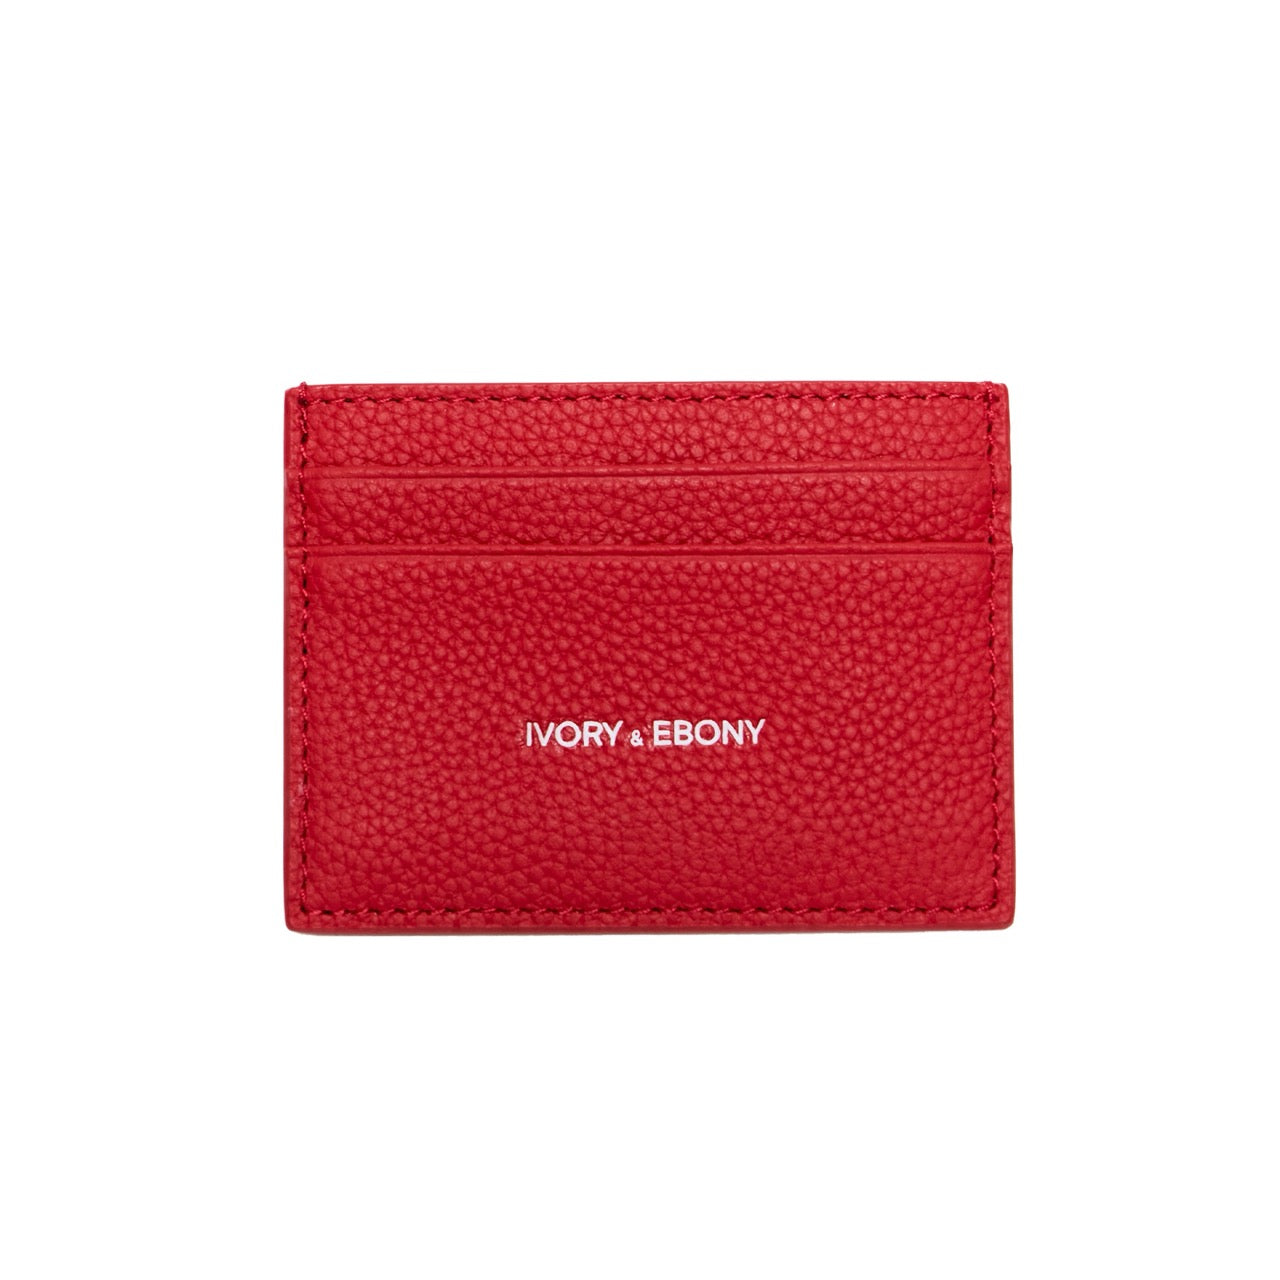 Slim Elegance, Maximum Security: Ivory & Ebony Red Card Holder - 100% Genuine Leather, RFID Blocking - Redefine Your Wallet Experience.